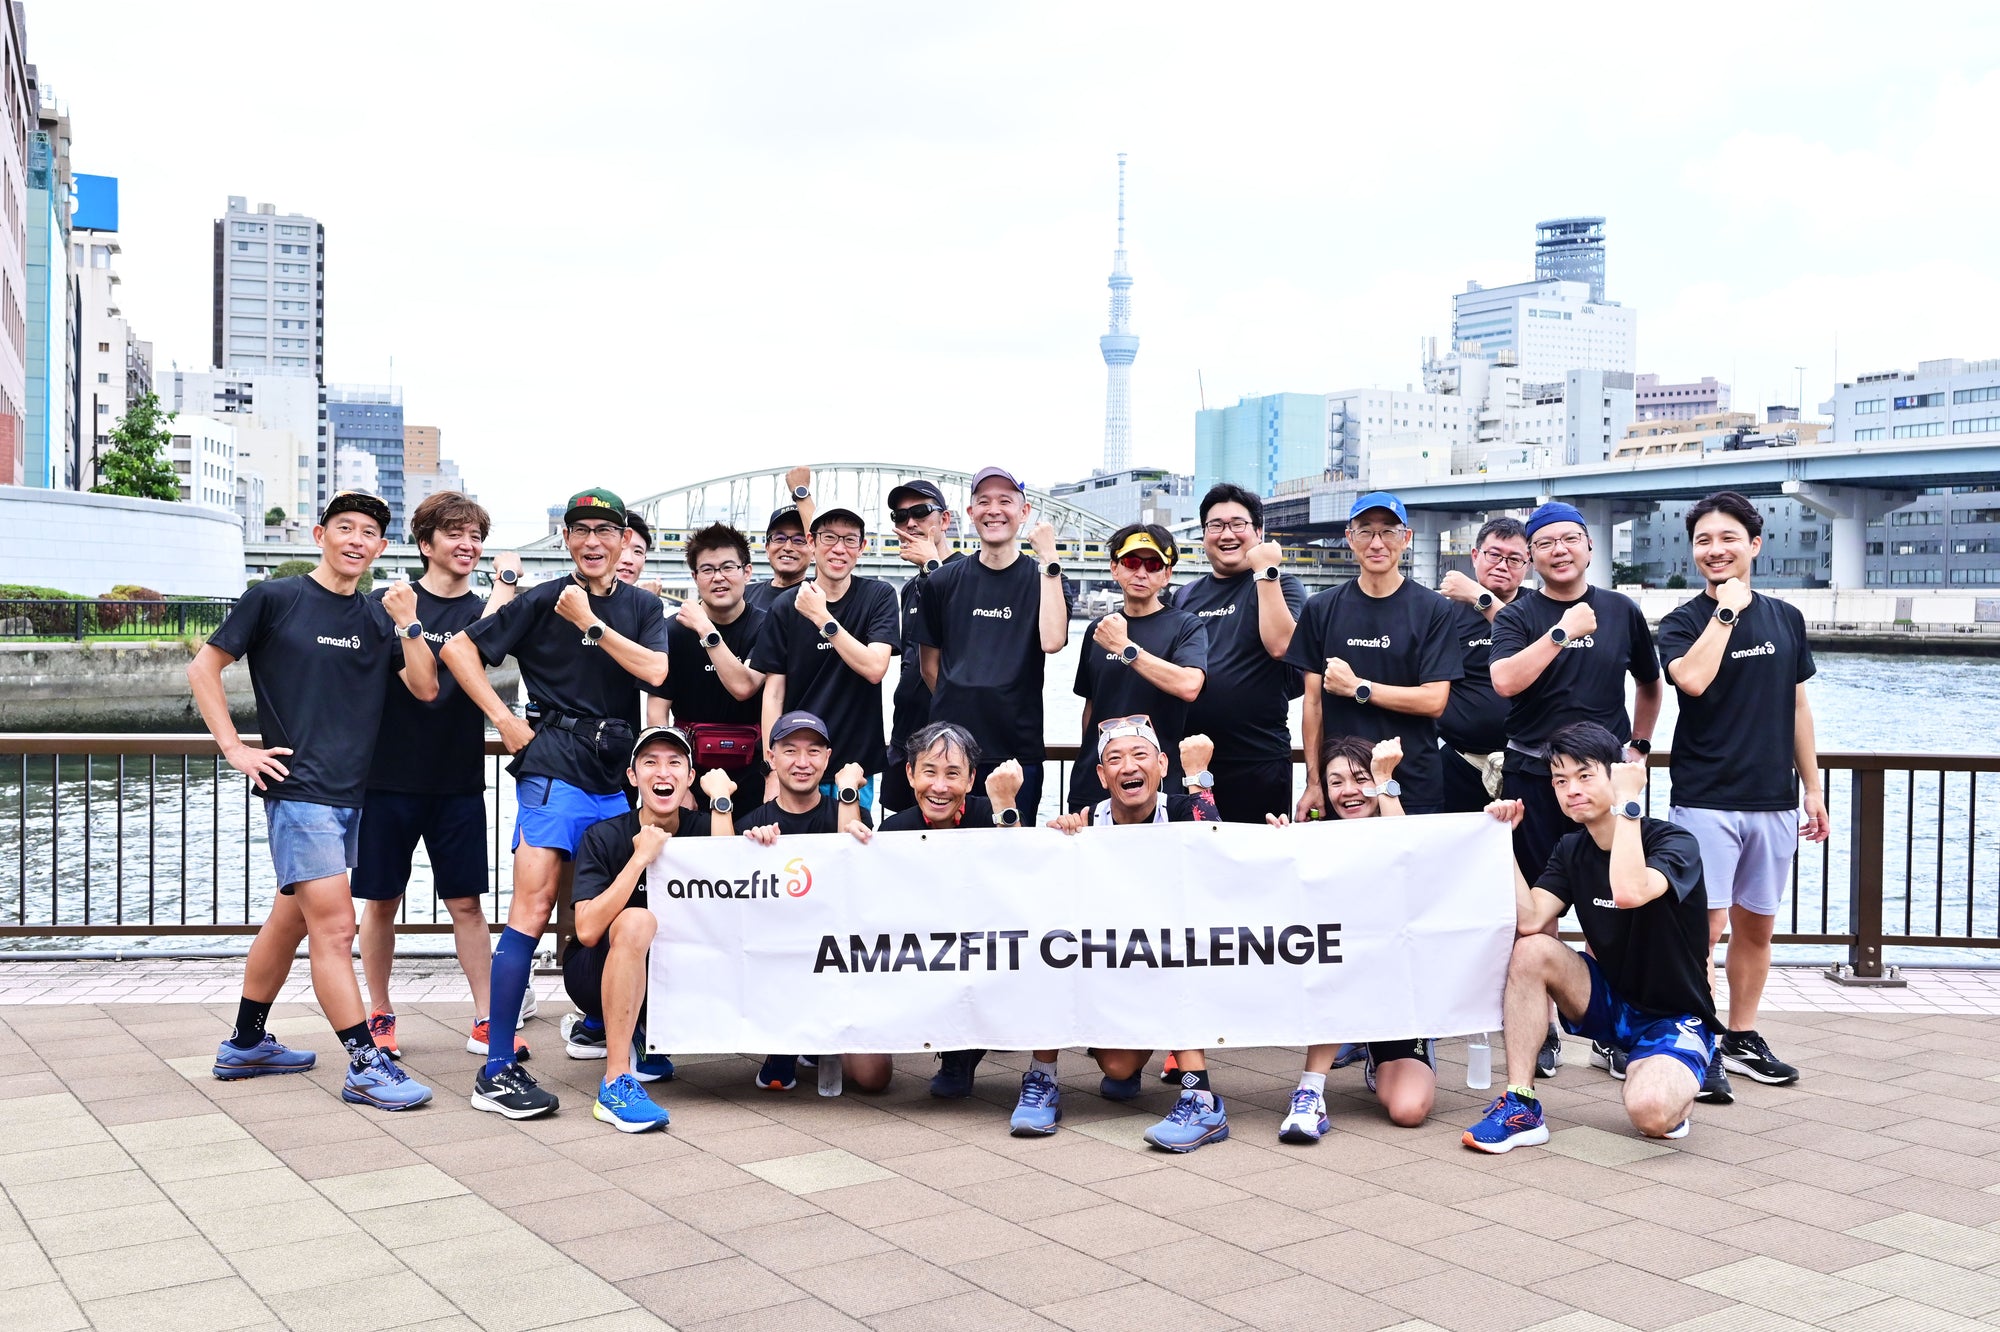 Amazfitがランニングイベントを開催 「Amazfit Challenge PRIME RUN in RYOGOKU」 9月30日（土）開催レポート